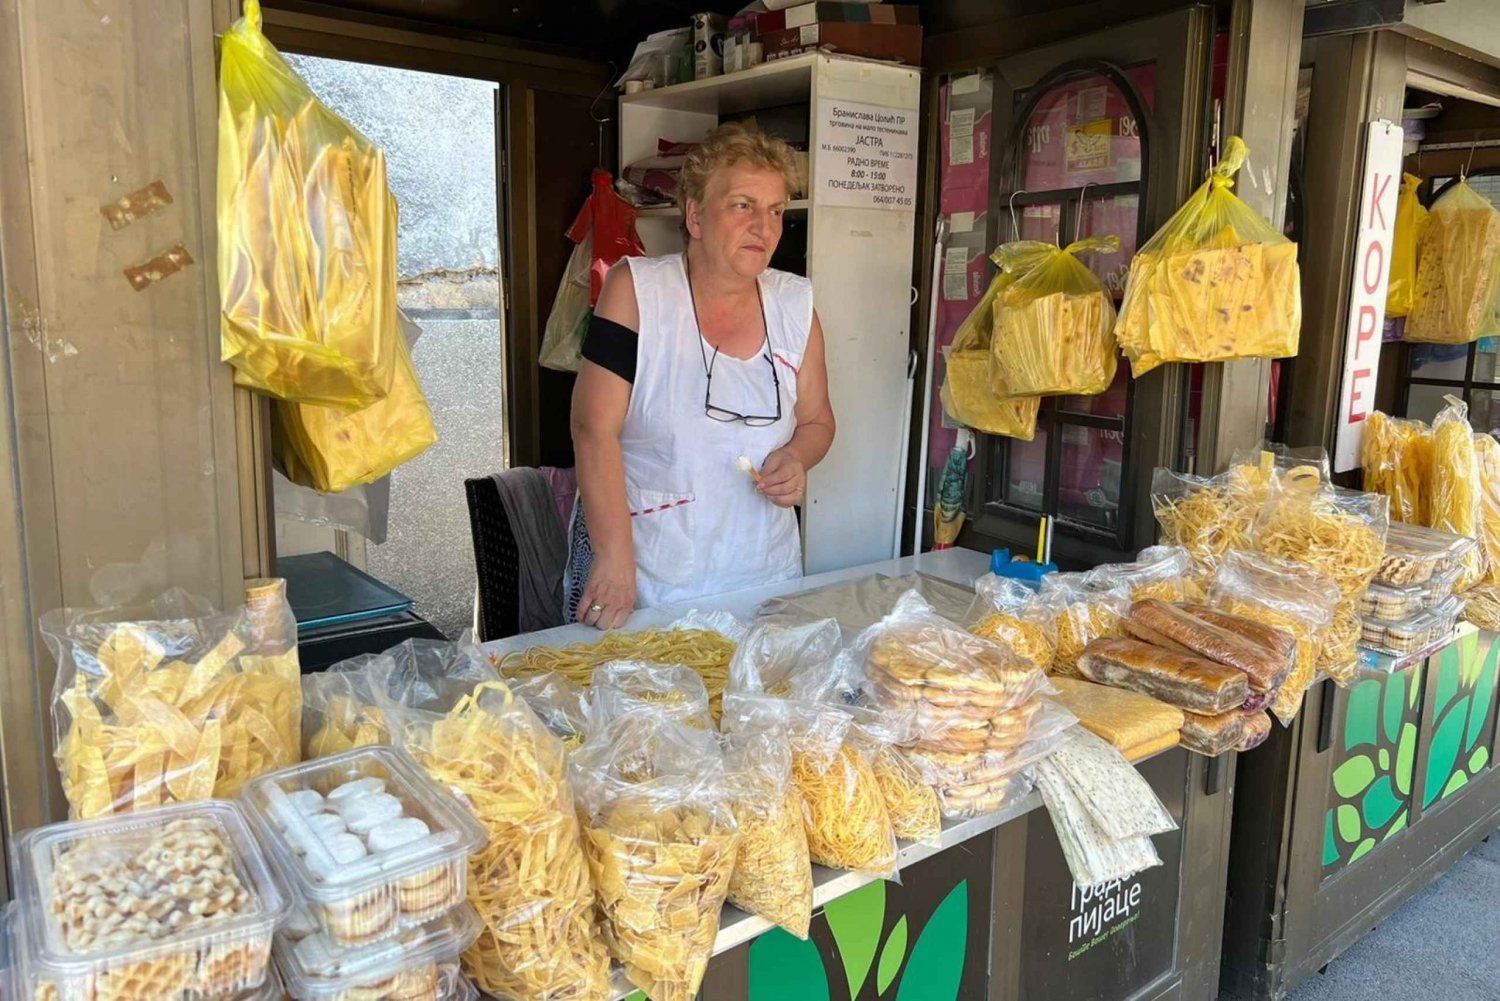 Belgrado: Tour culinario con degustación de comida serbia